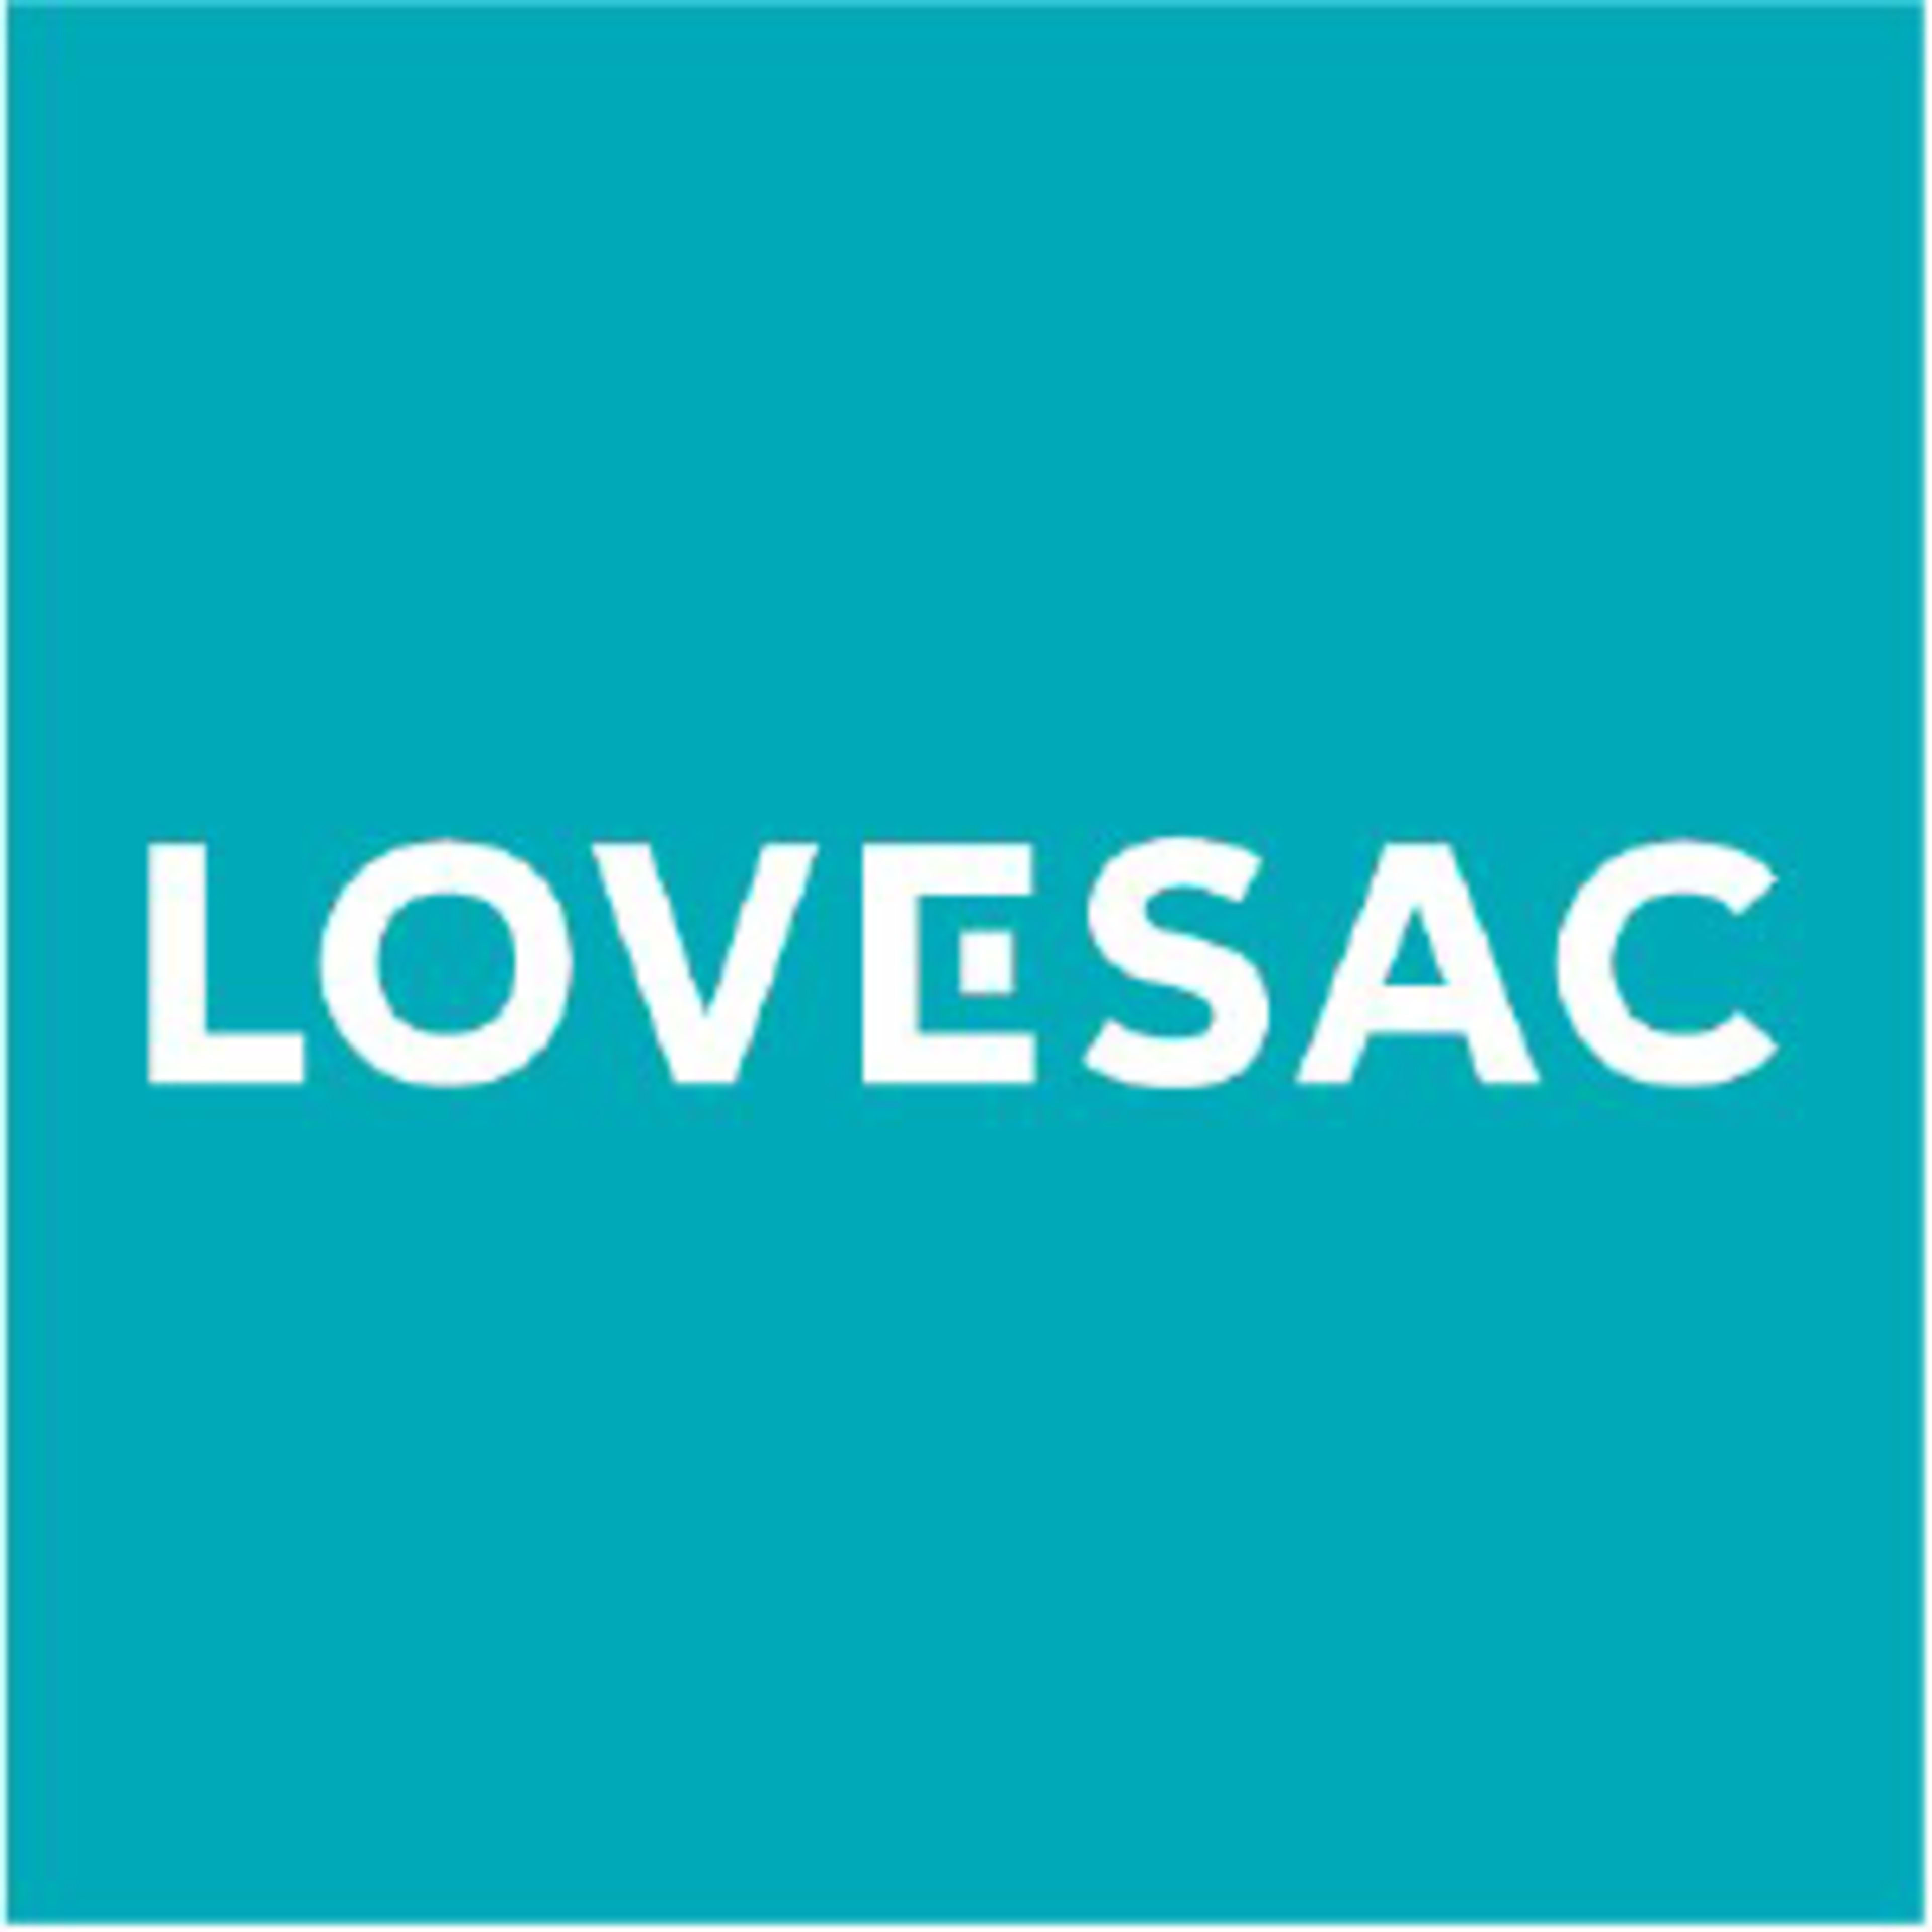 The Lovesac Company Code